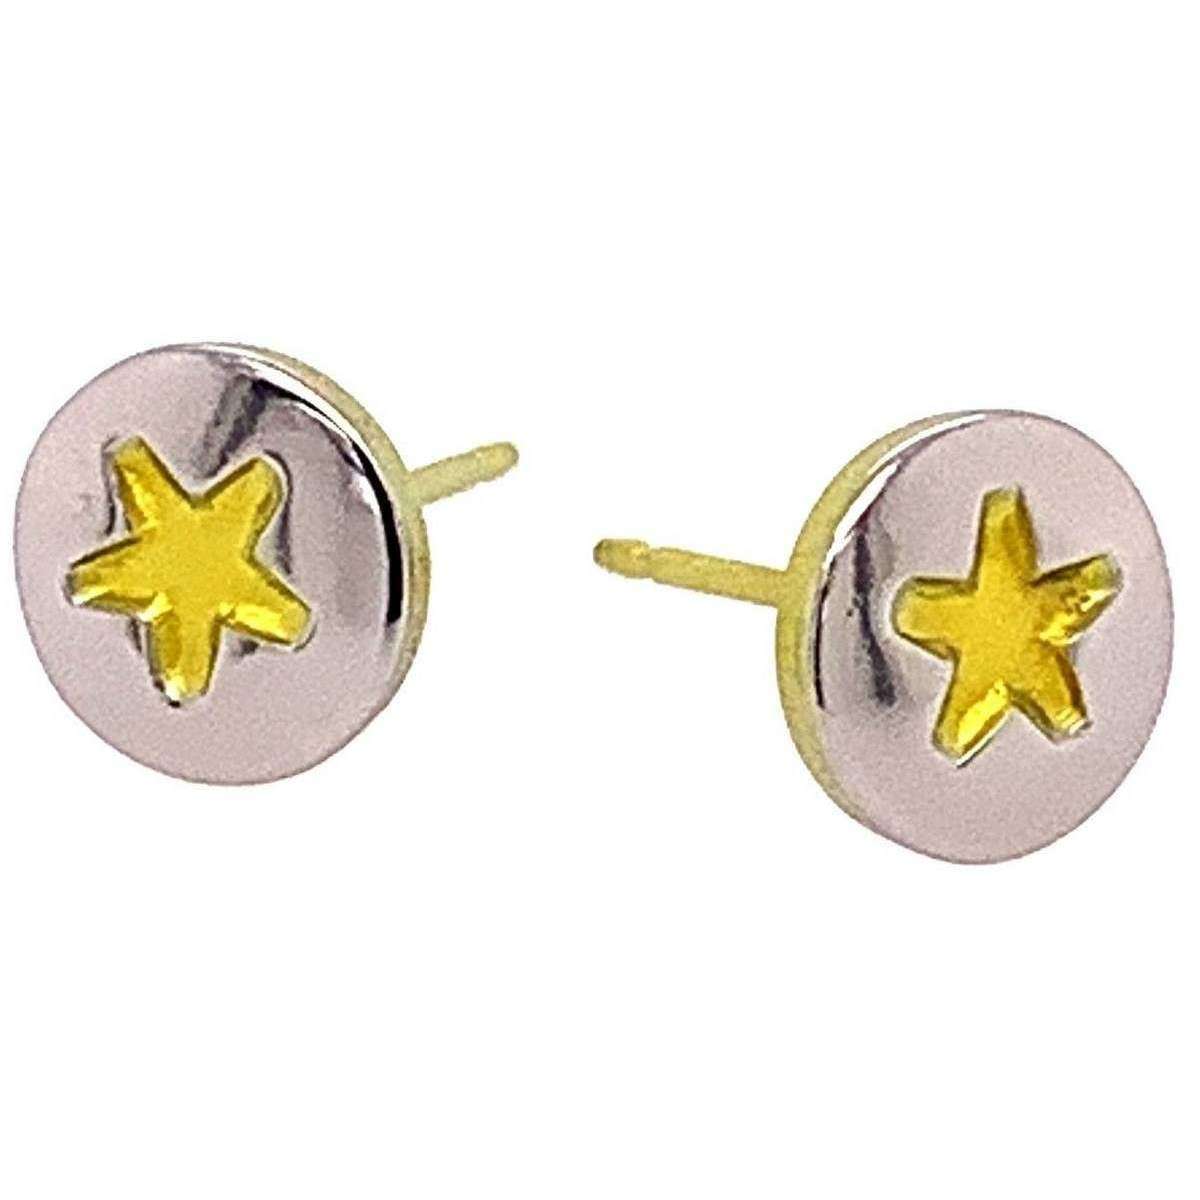 Ti2 Titanium Star Stud Earrings - Yellow